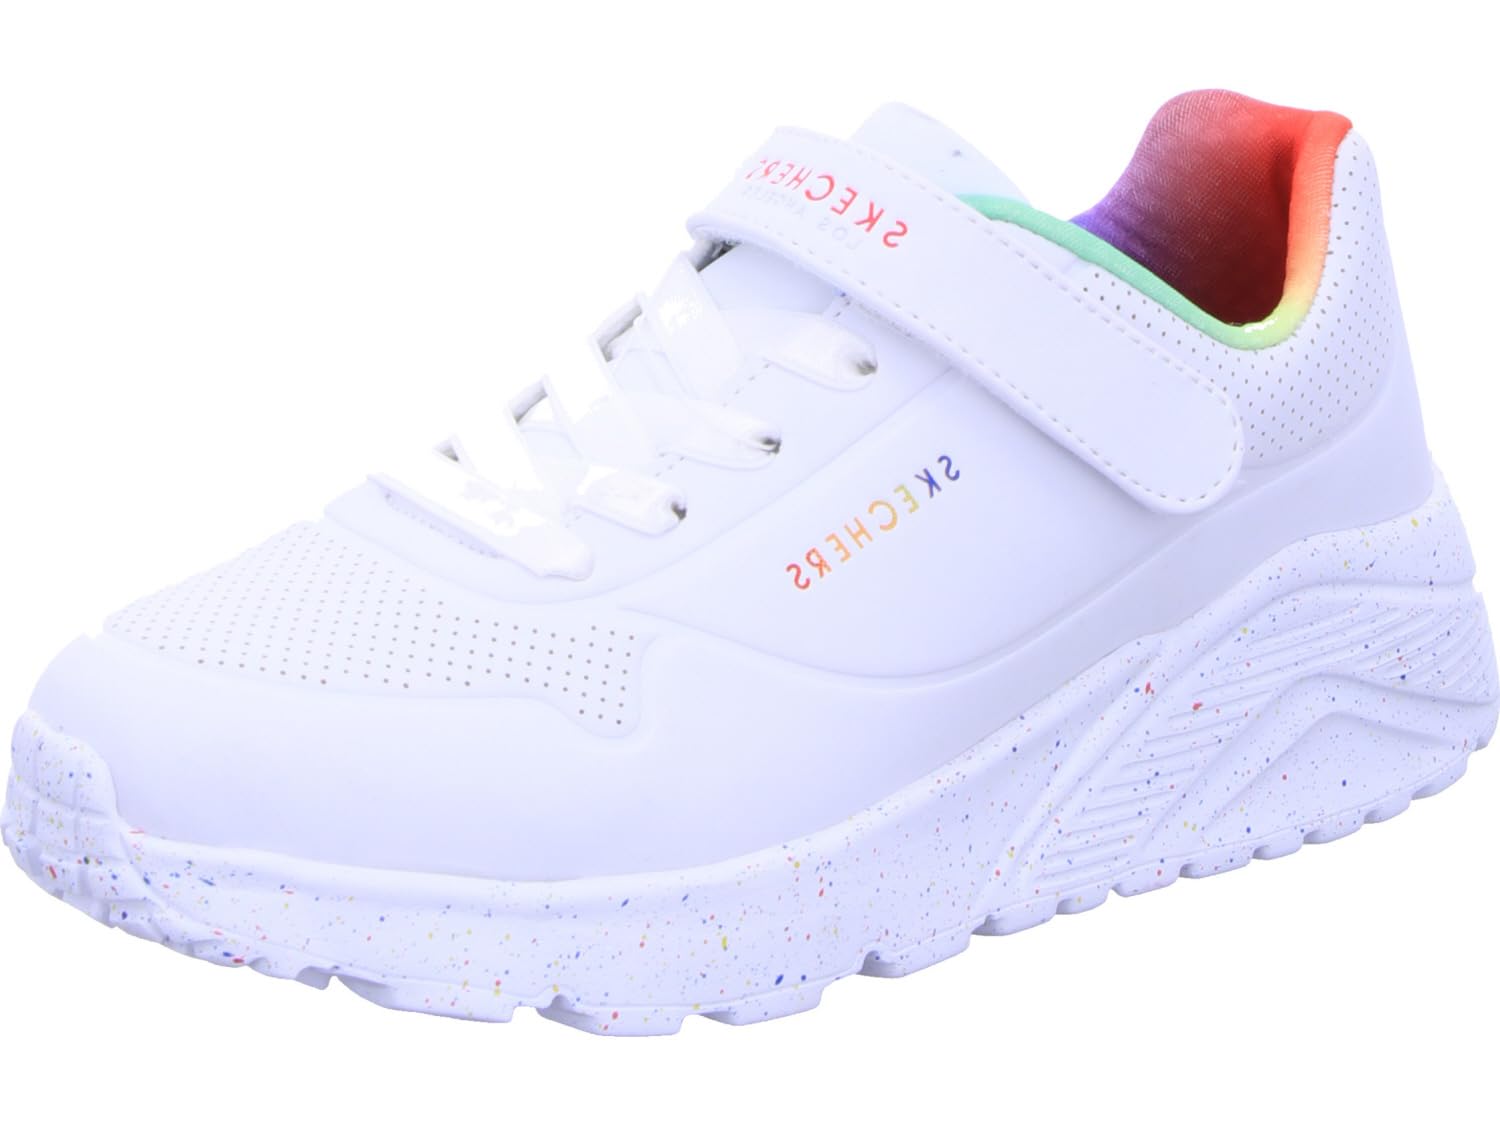 Skechers Sports Shoes,Sneakers, White, 29 EU